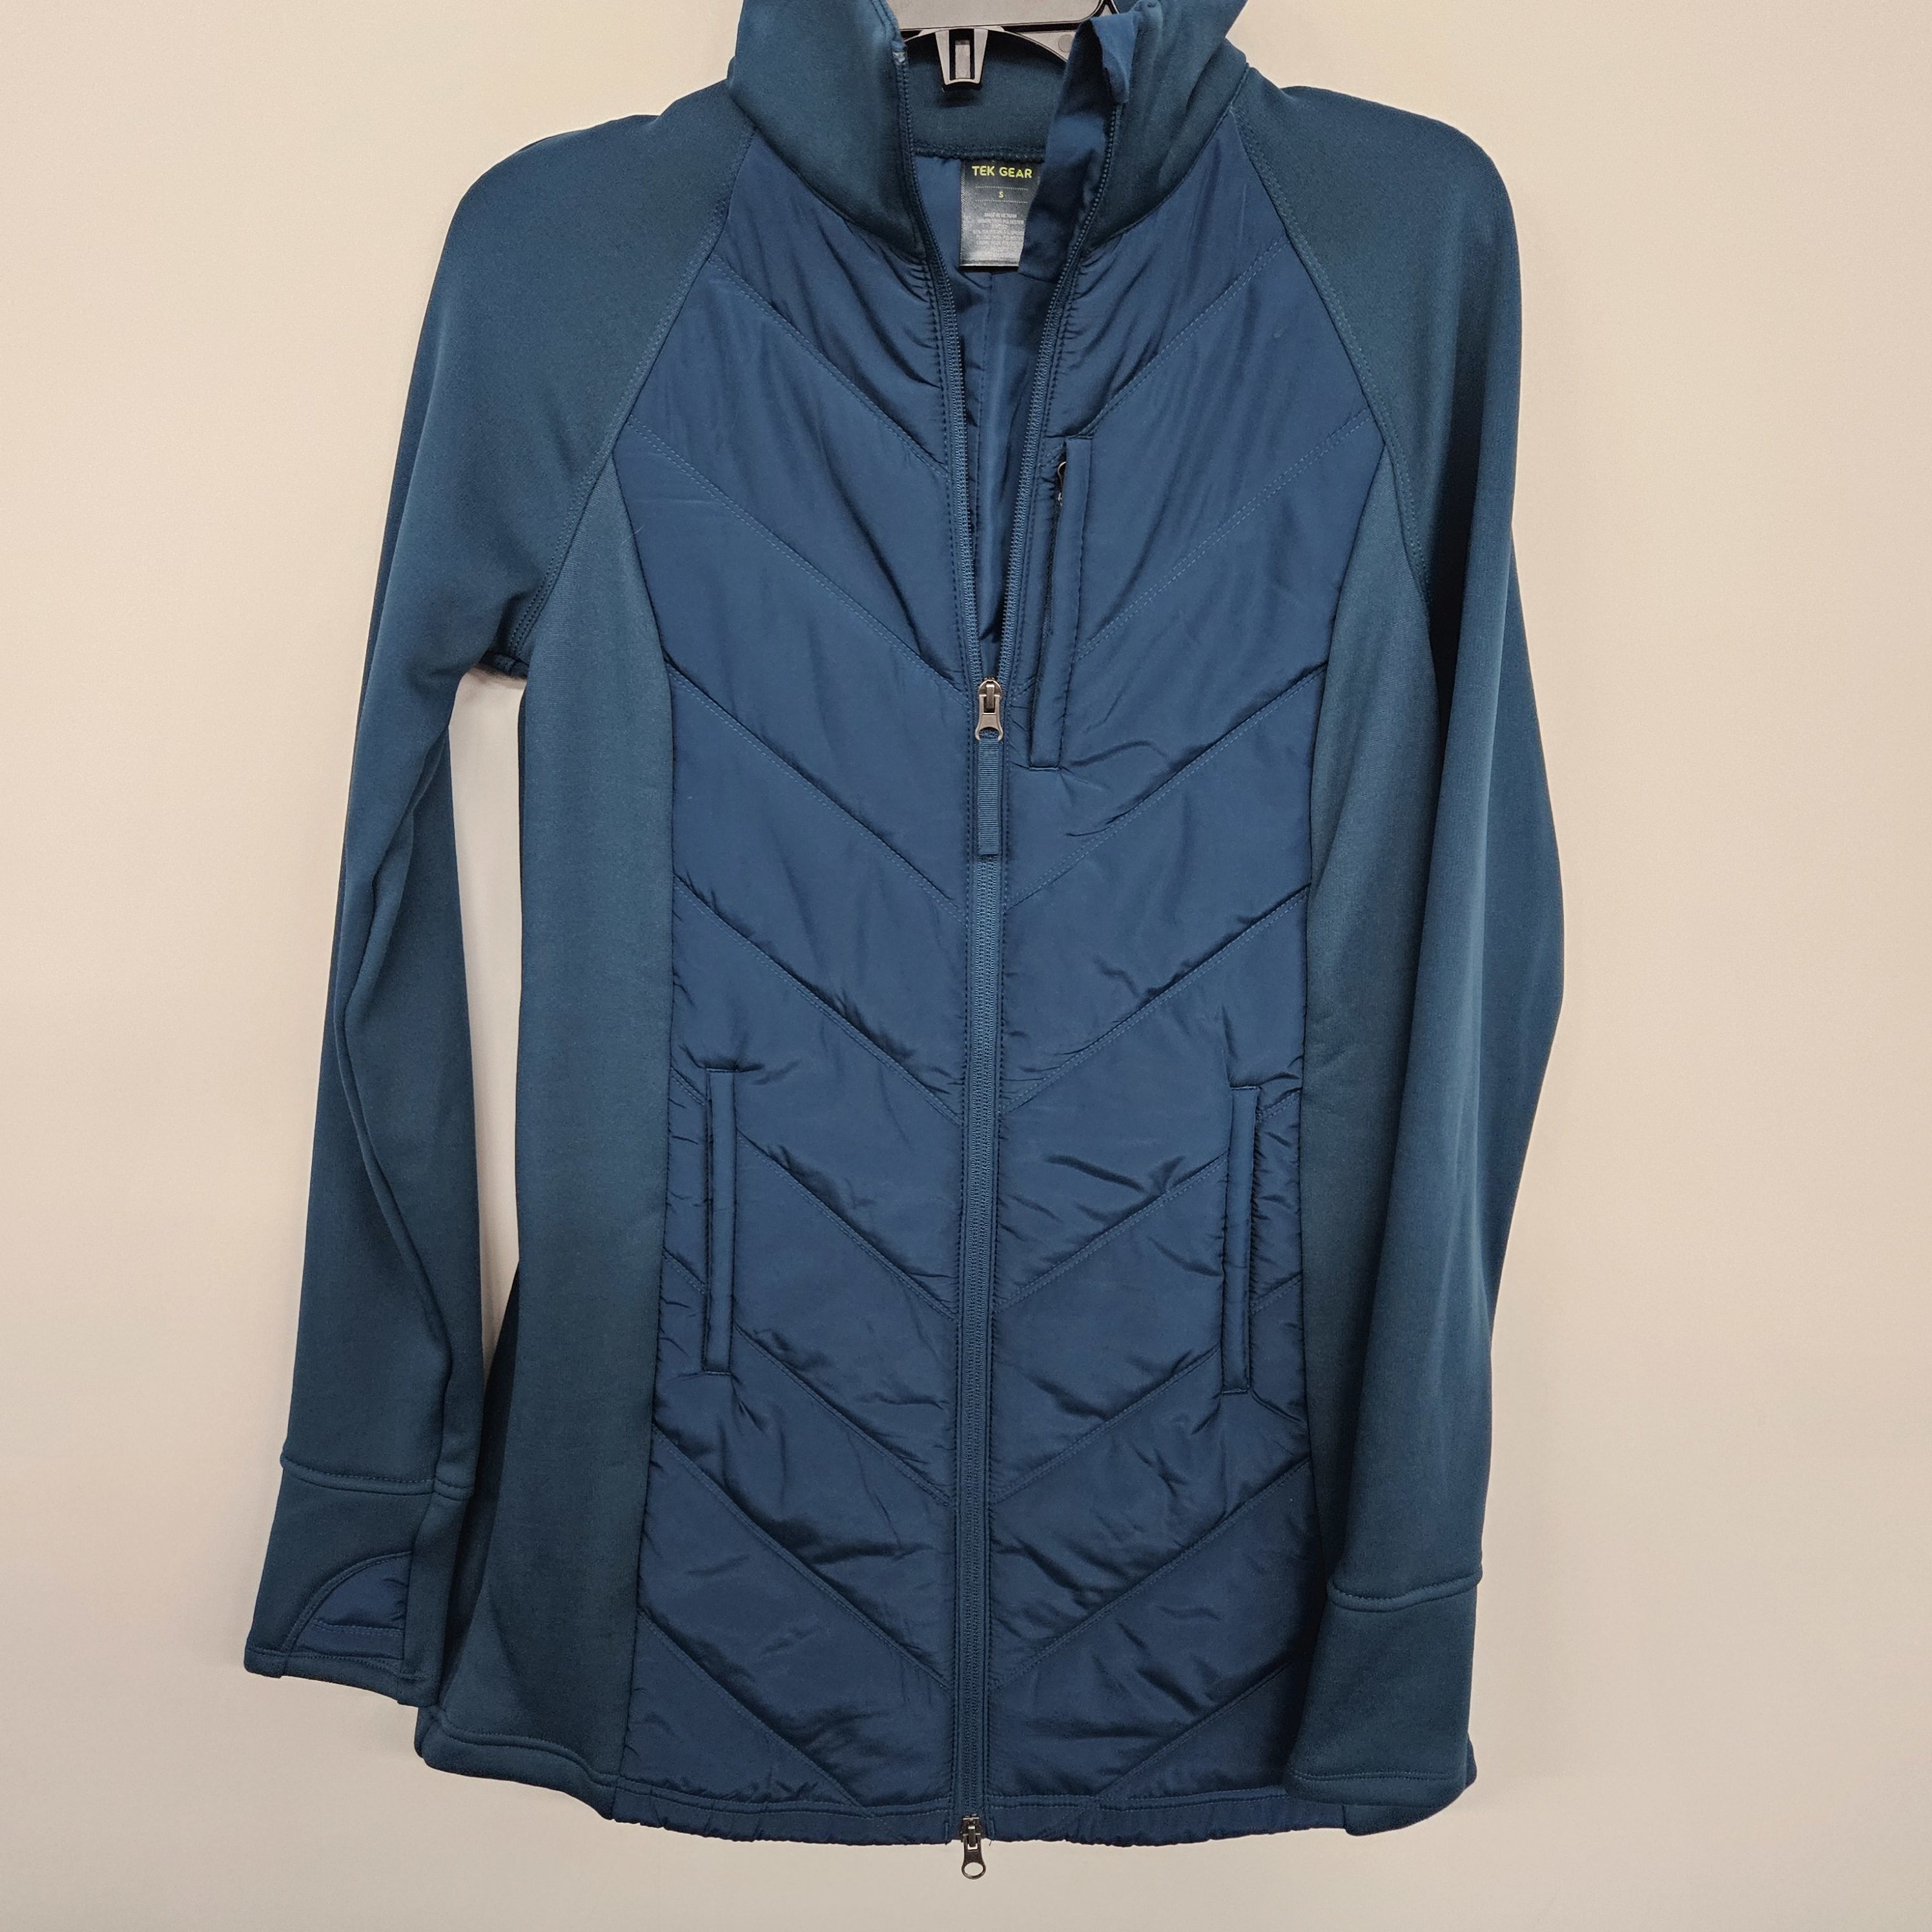 Kohl's Tek Gear Mixed Media Jacket Teal Blue Cozy Fleece Interior Hooded  Girls